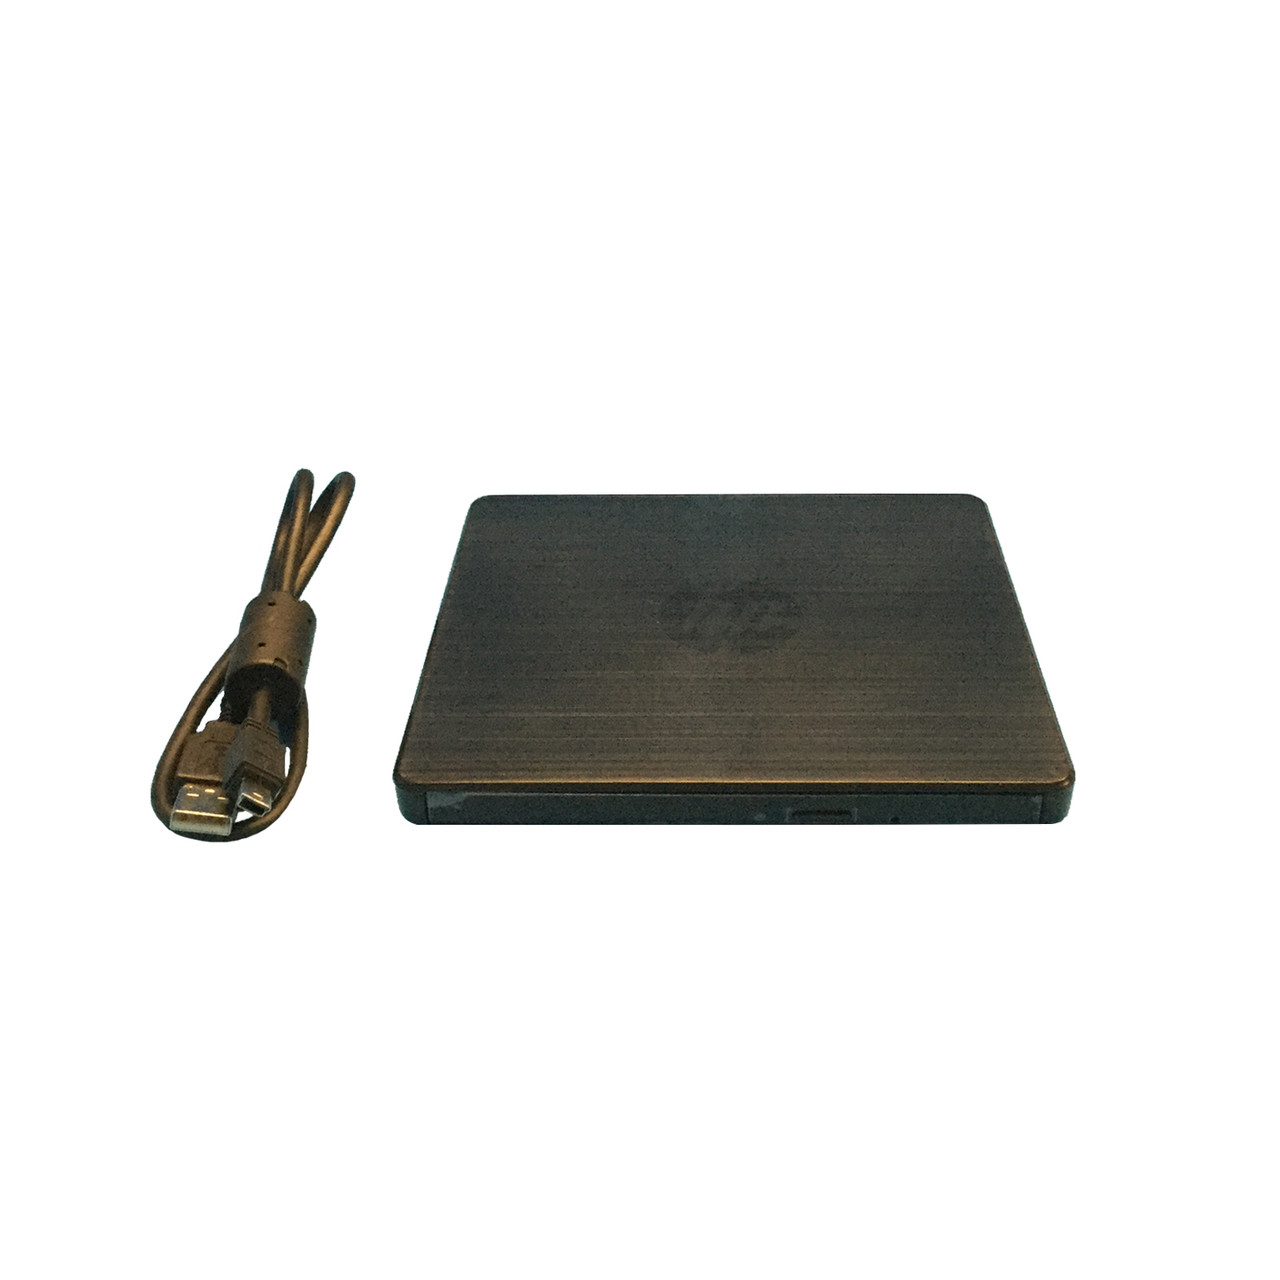 New Sealed HP USB External DVD/RW Drive Model F2B56AA 747554-001 1 Year Warranty 